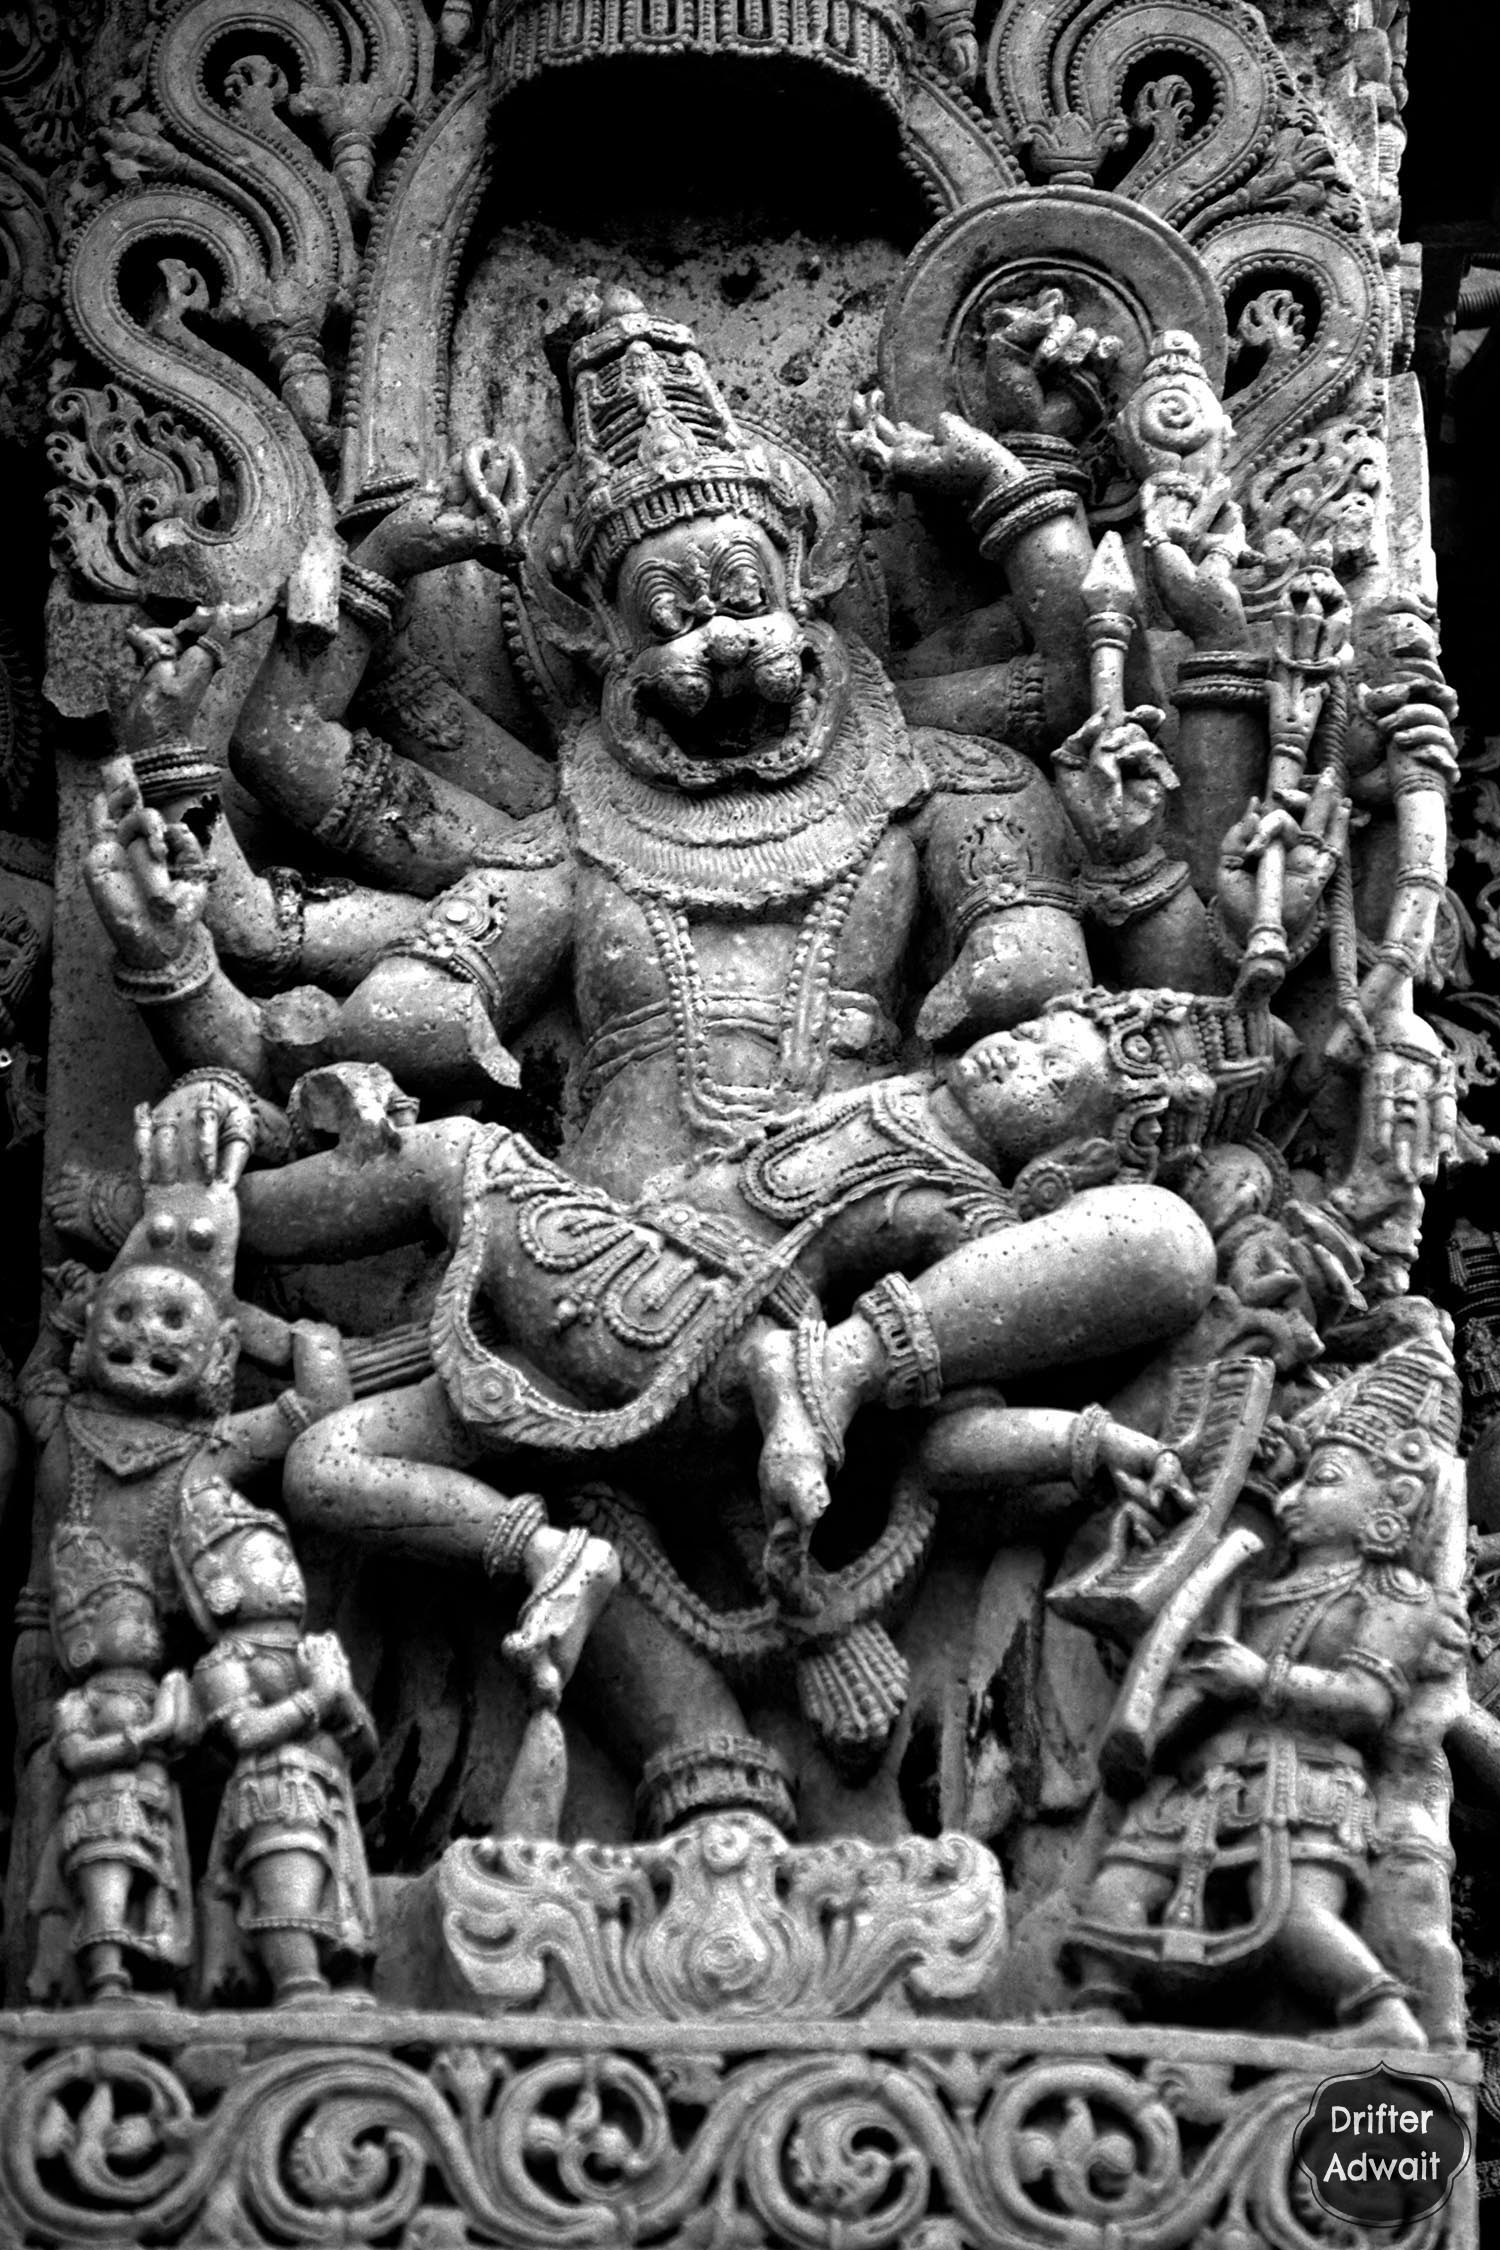 Narsimha- The most ferocious Vishnu